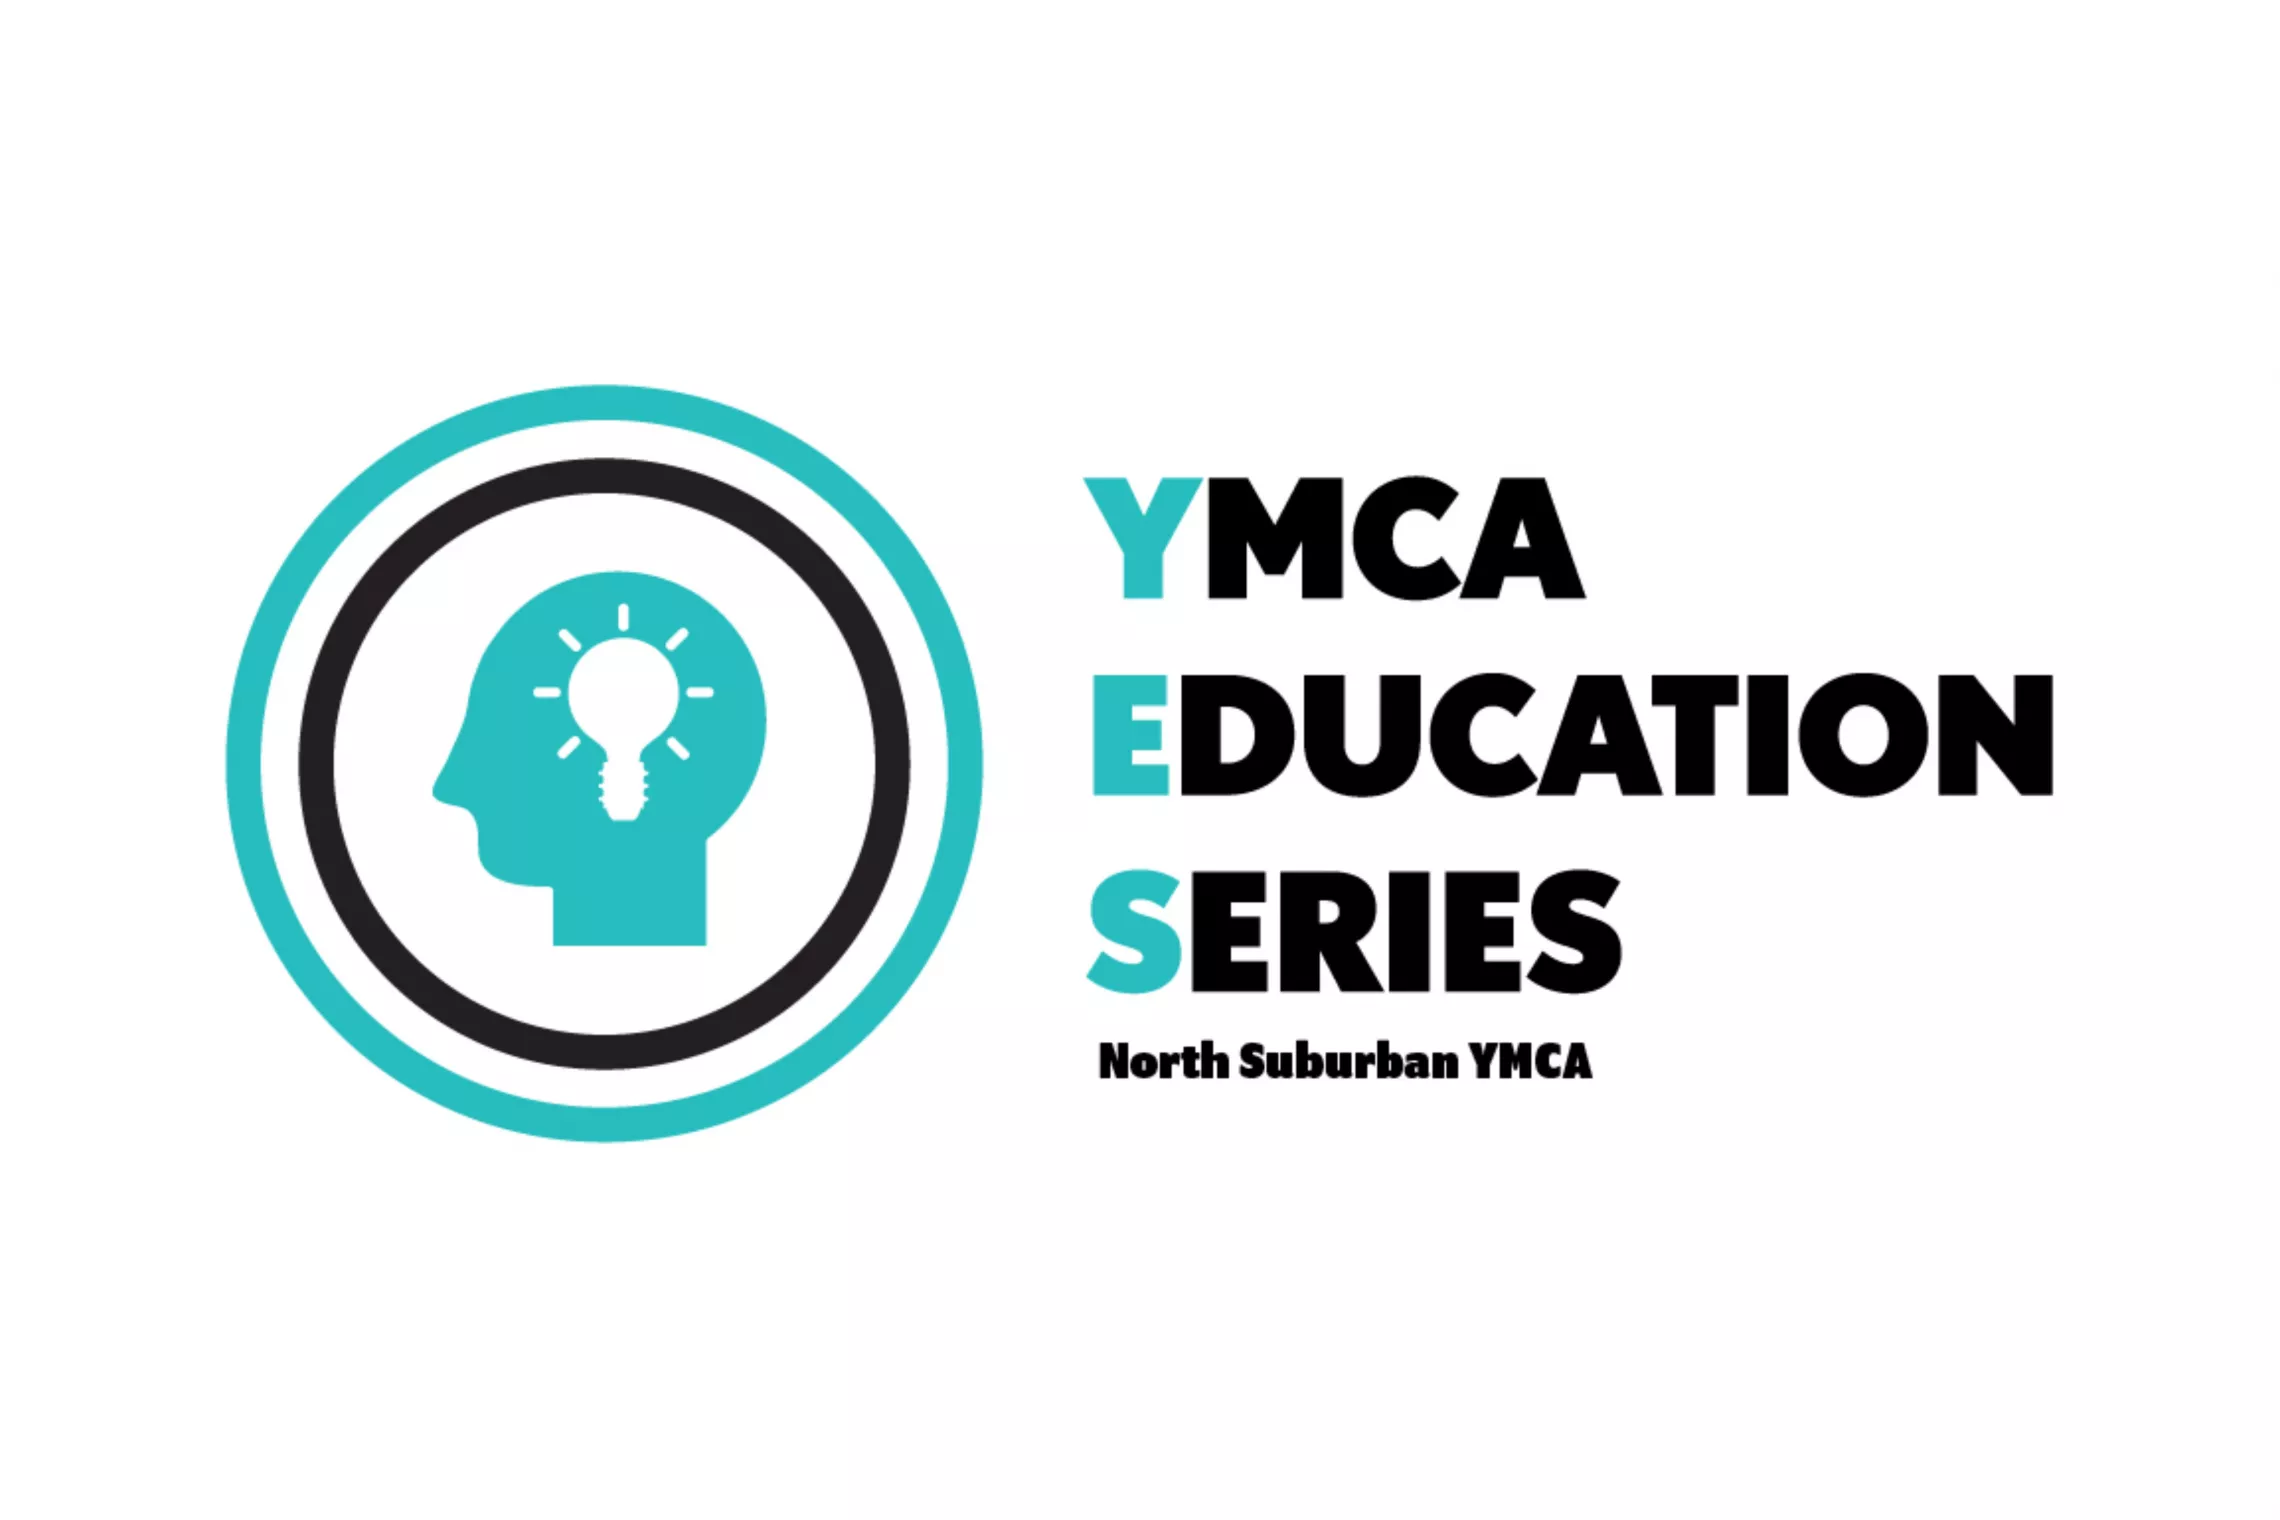 YMCA EDUCATION SERIES